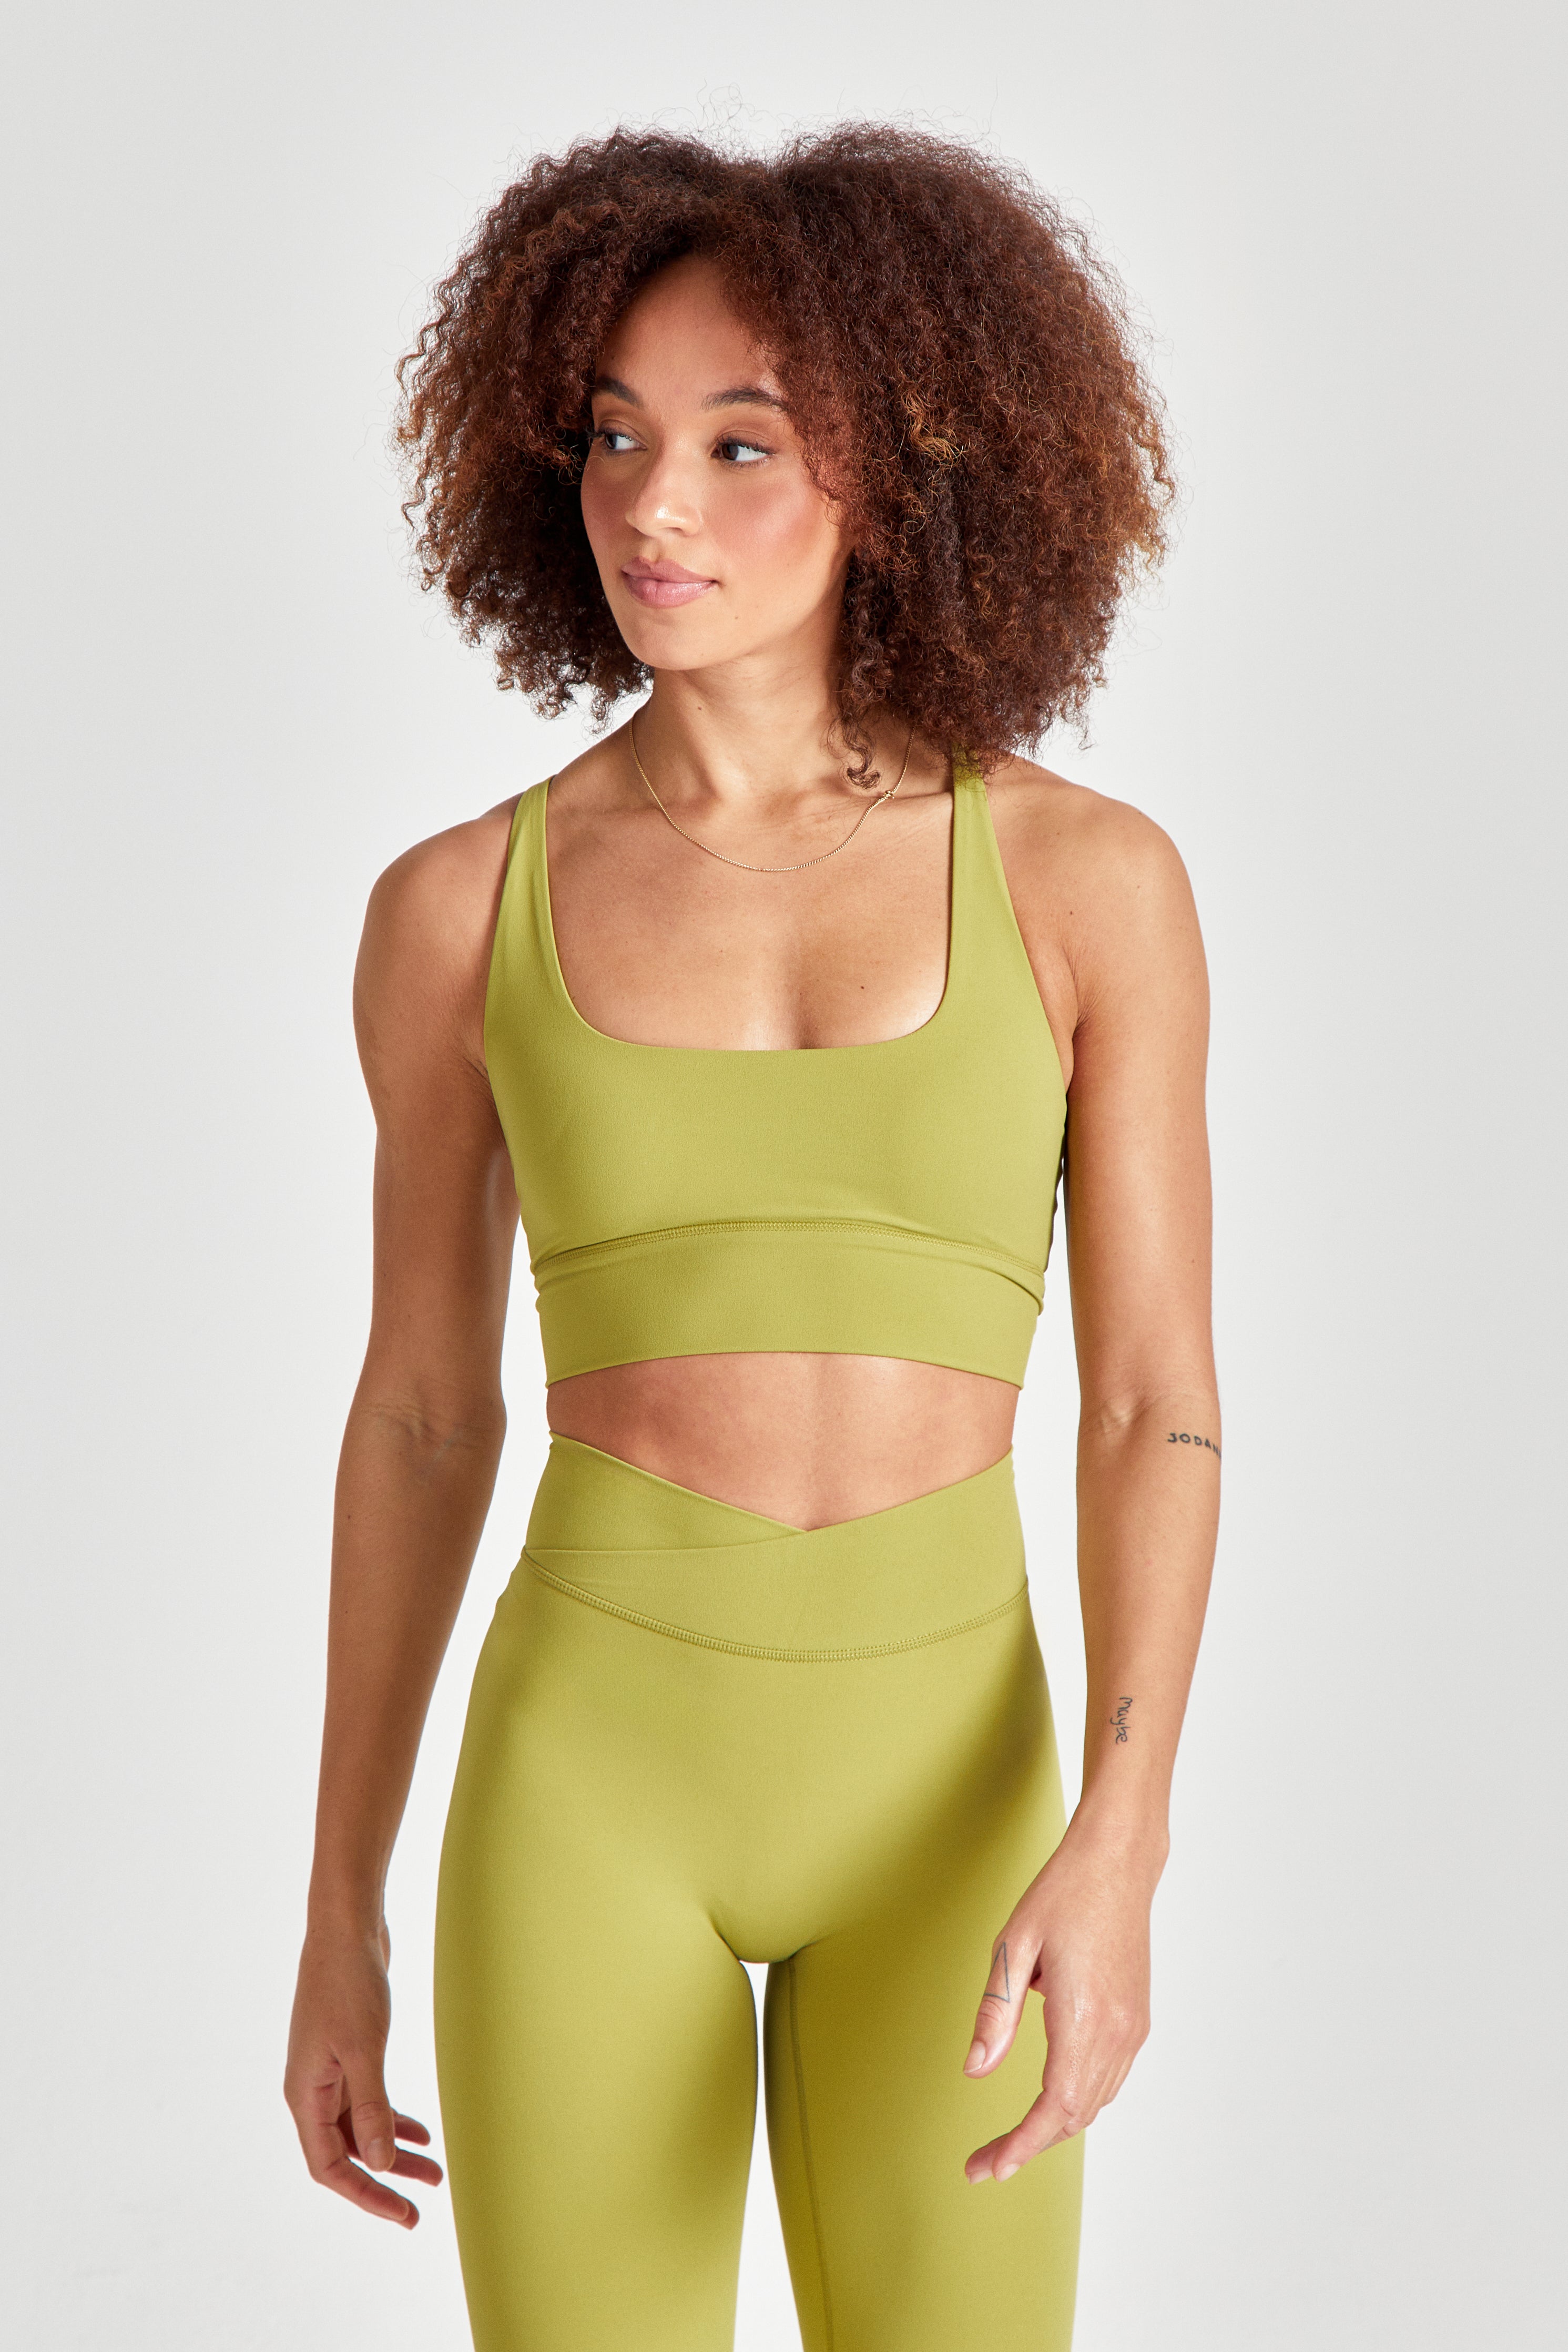 Shop Ivy Reina's Twisted Halter Neck Active Bra - Perfect Gym Wear